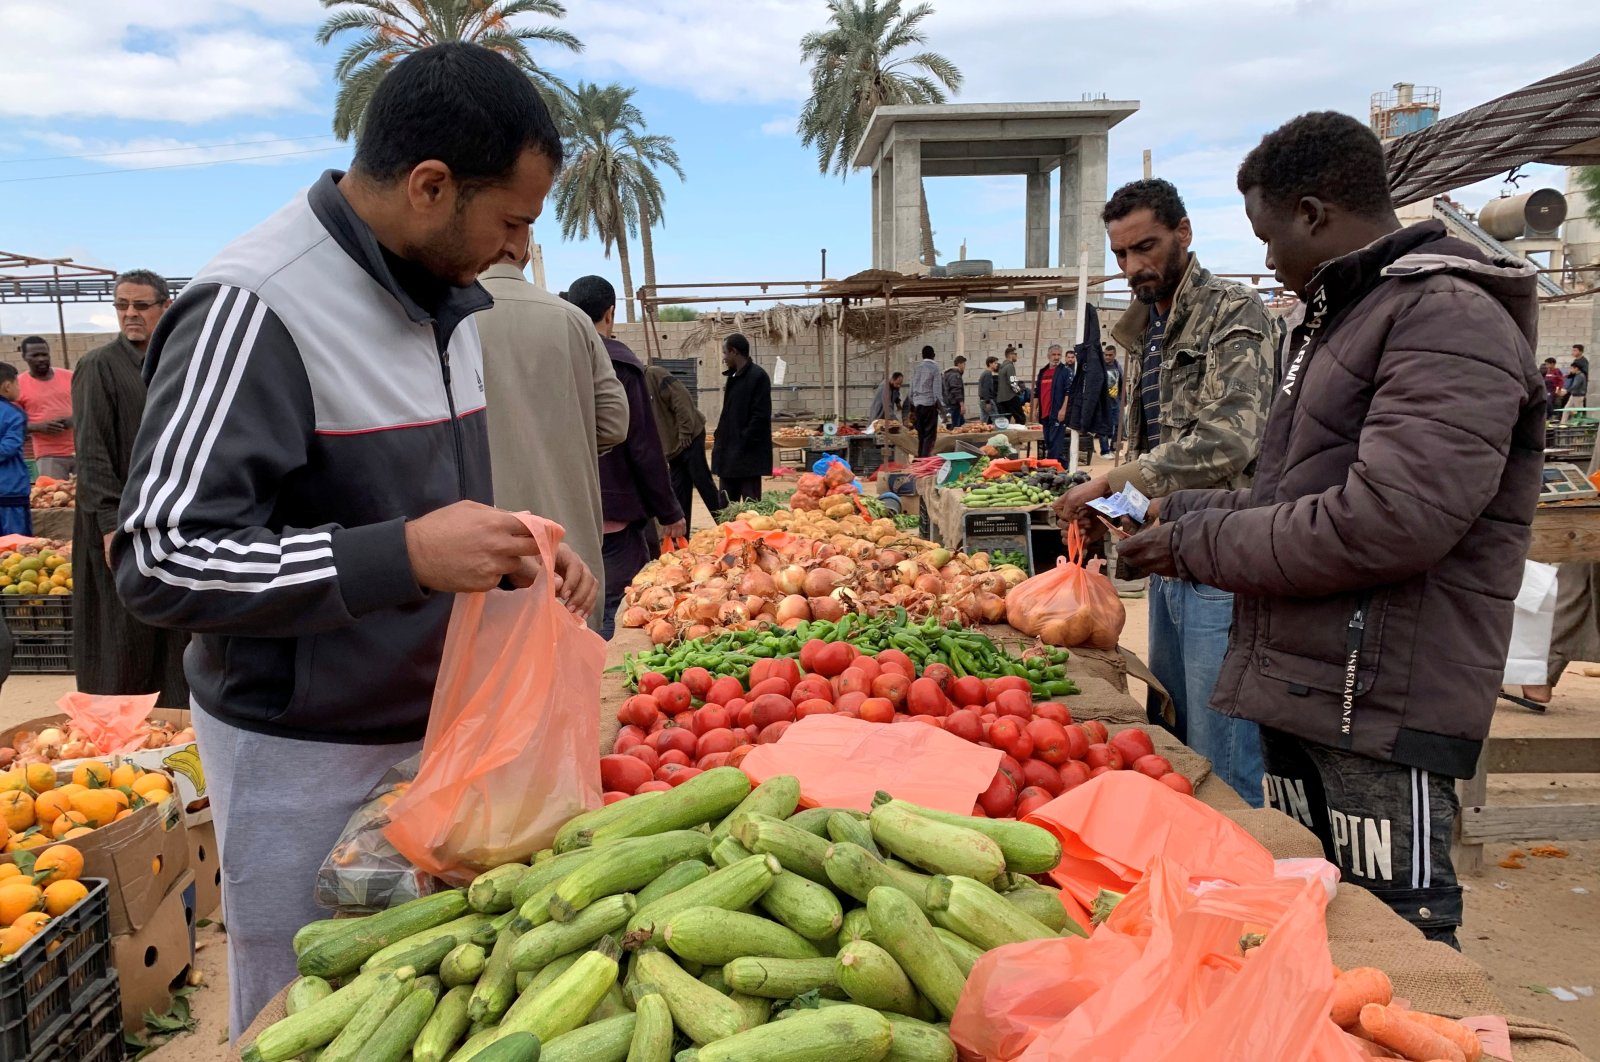 People buy vegetables from a market amid the coronavirus outbreak, in Misrata, Libya, Nov. 27, 2020. (Reuters Photo)